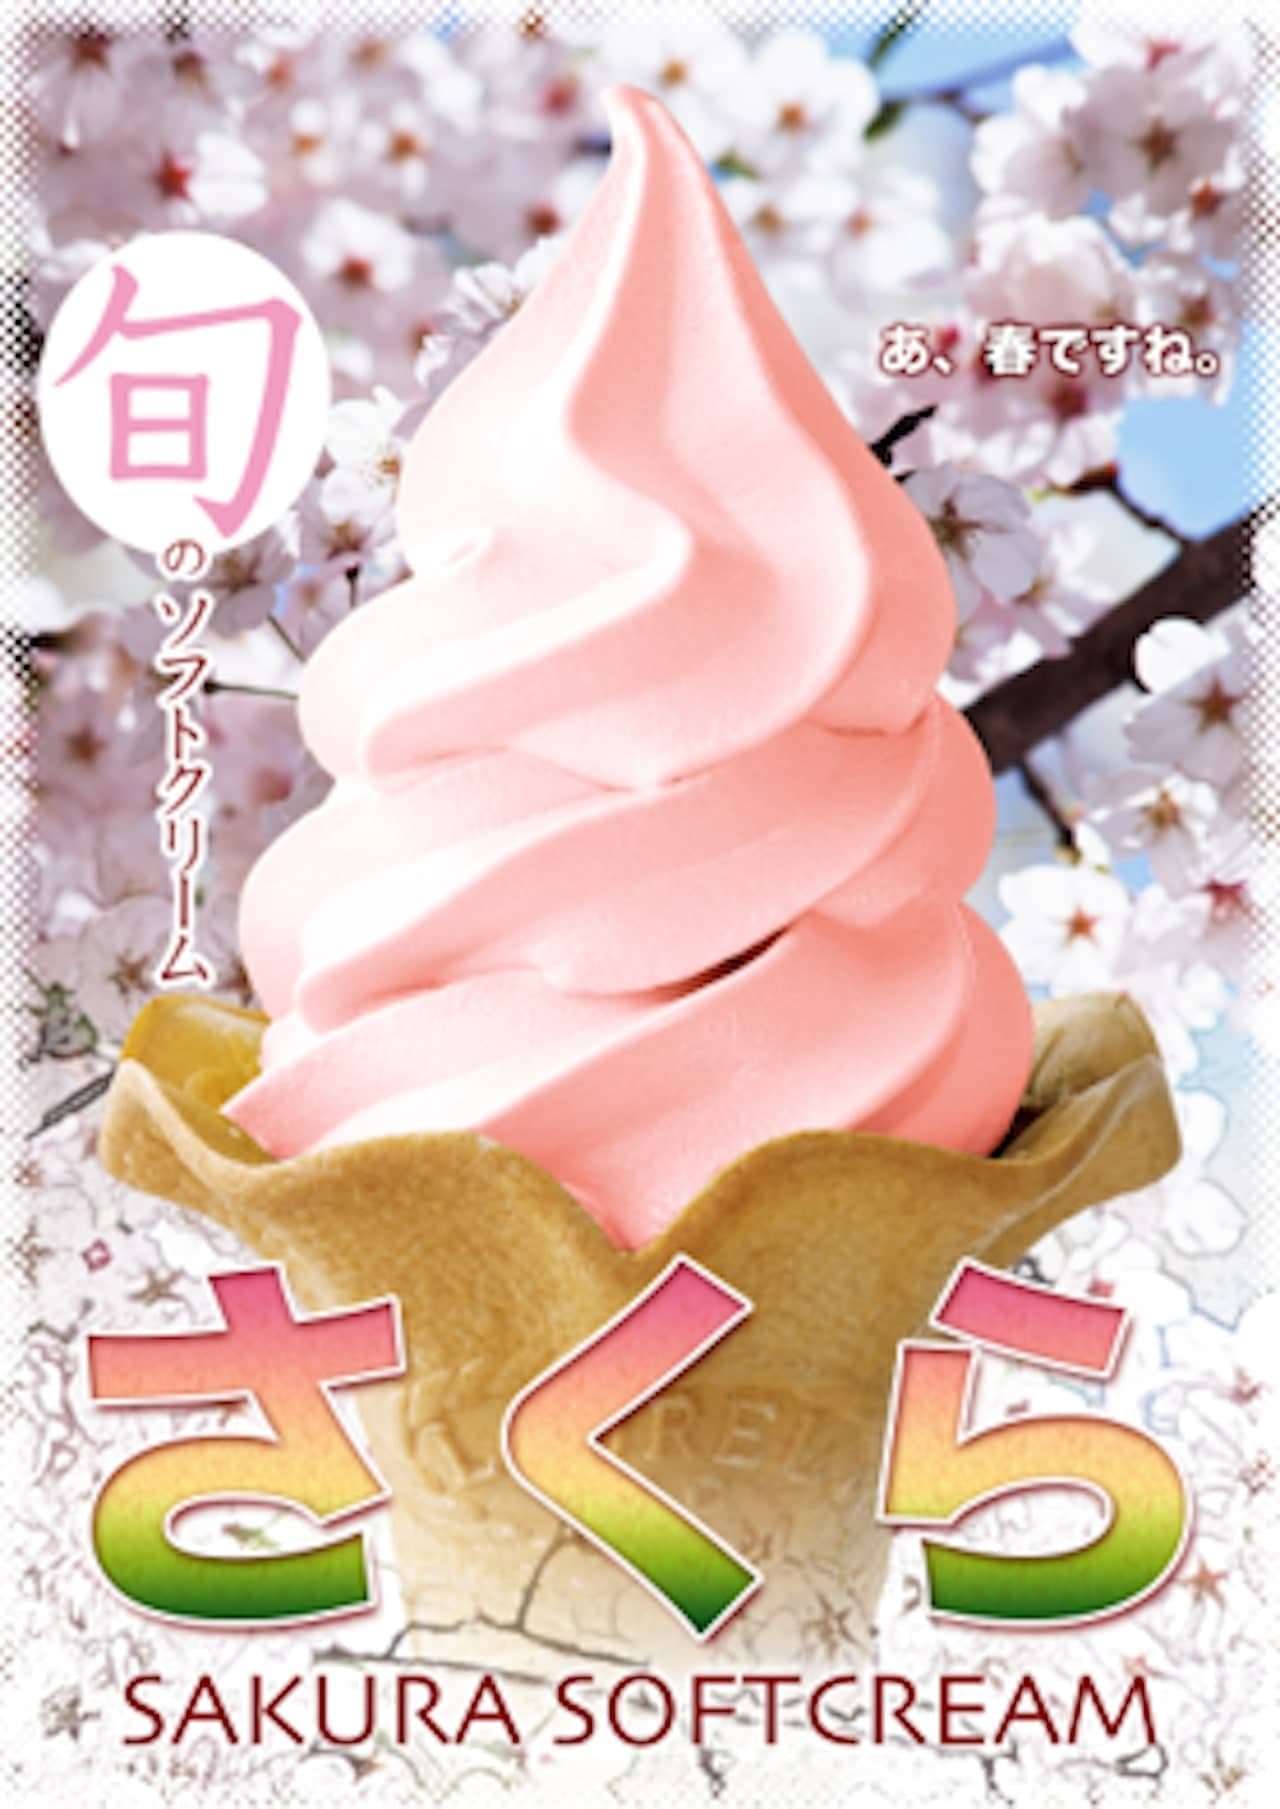 "Seasonal soft serve ice cream mix Sakura" Elegant flavor with scent of cherry blossoms